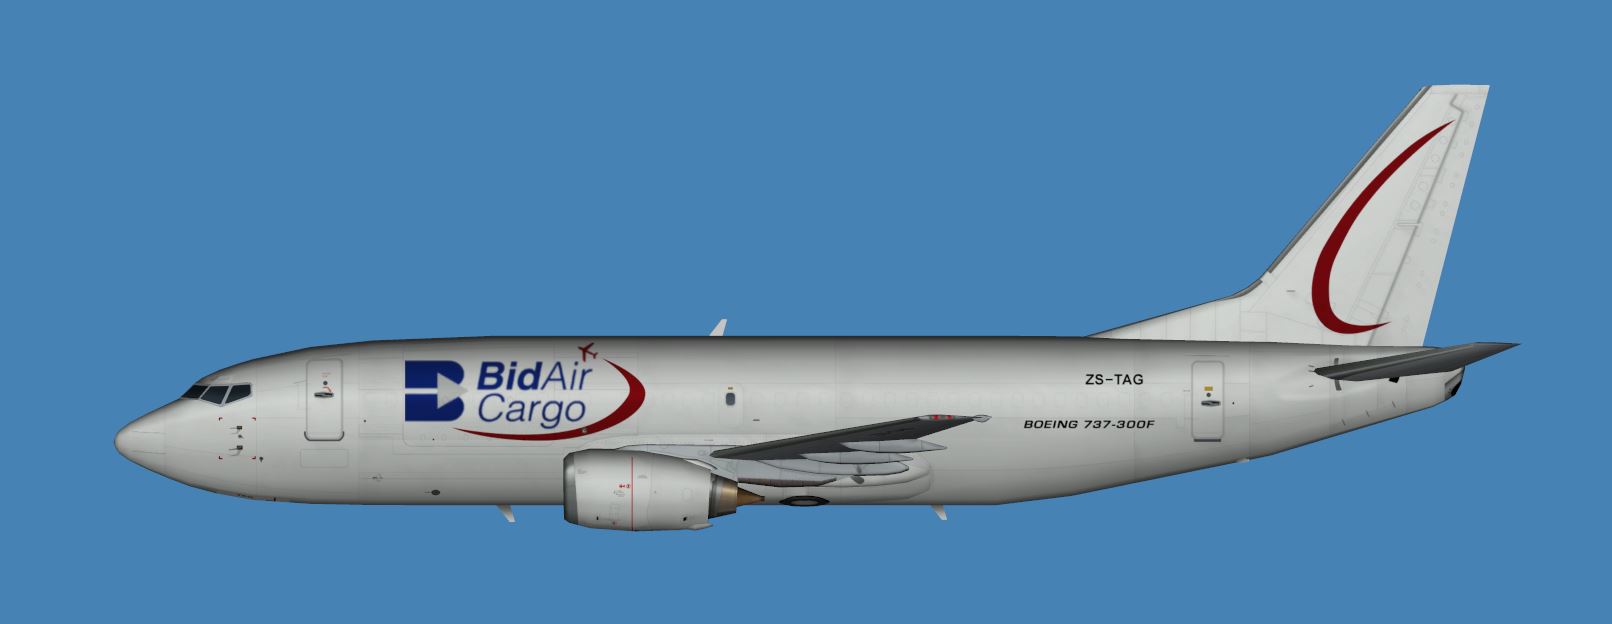 BidAir Cargo